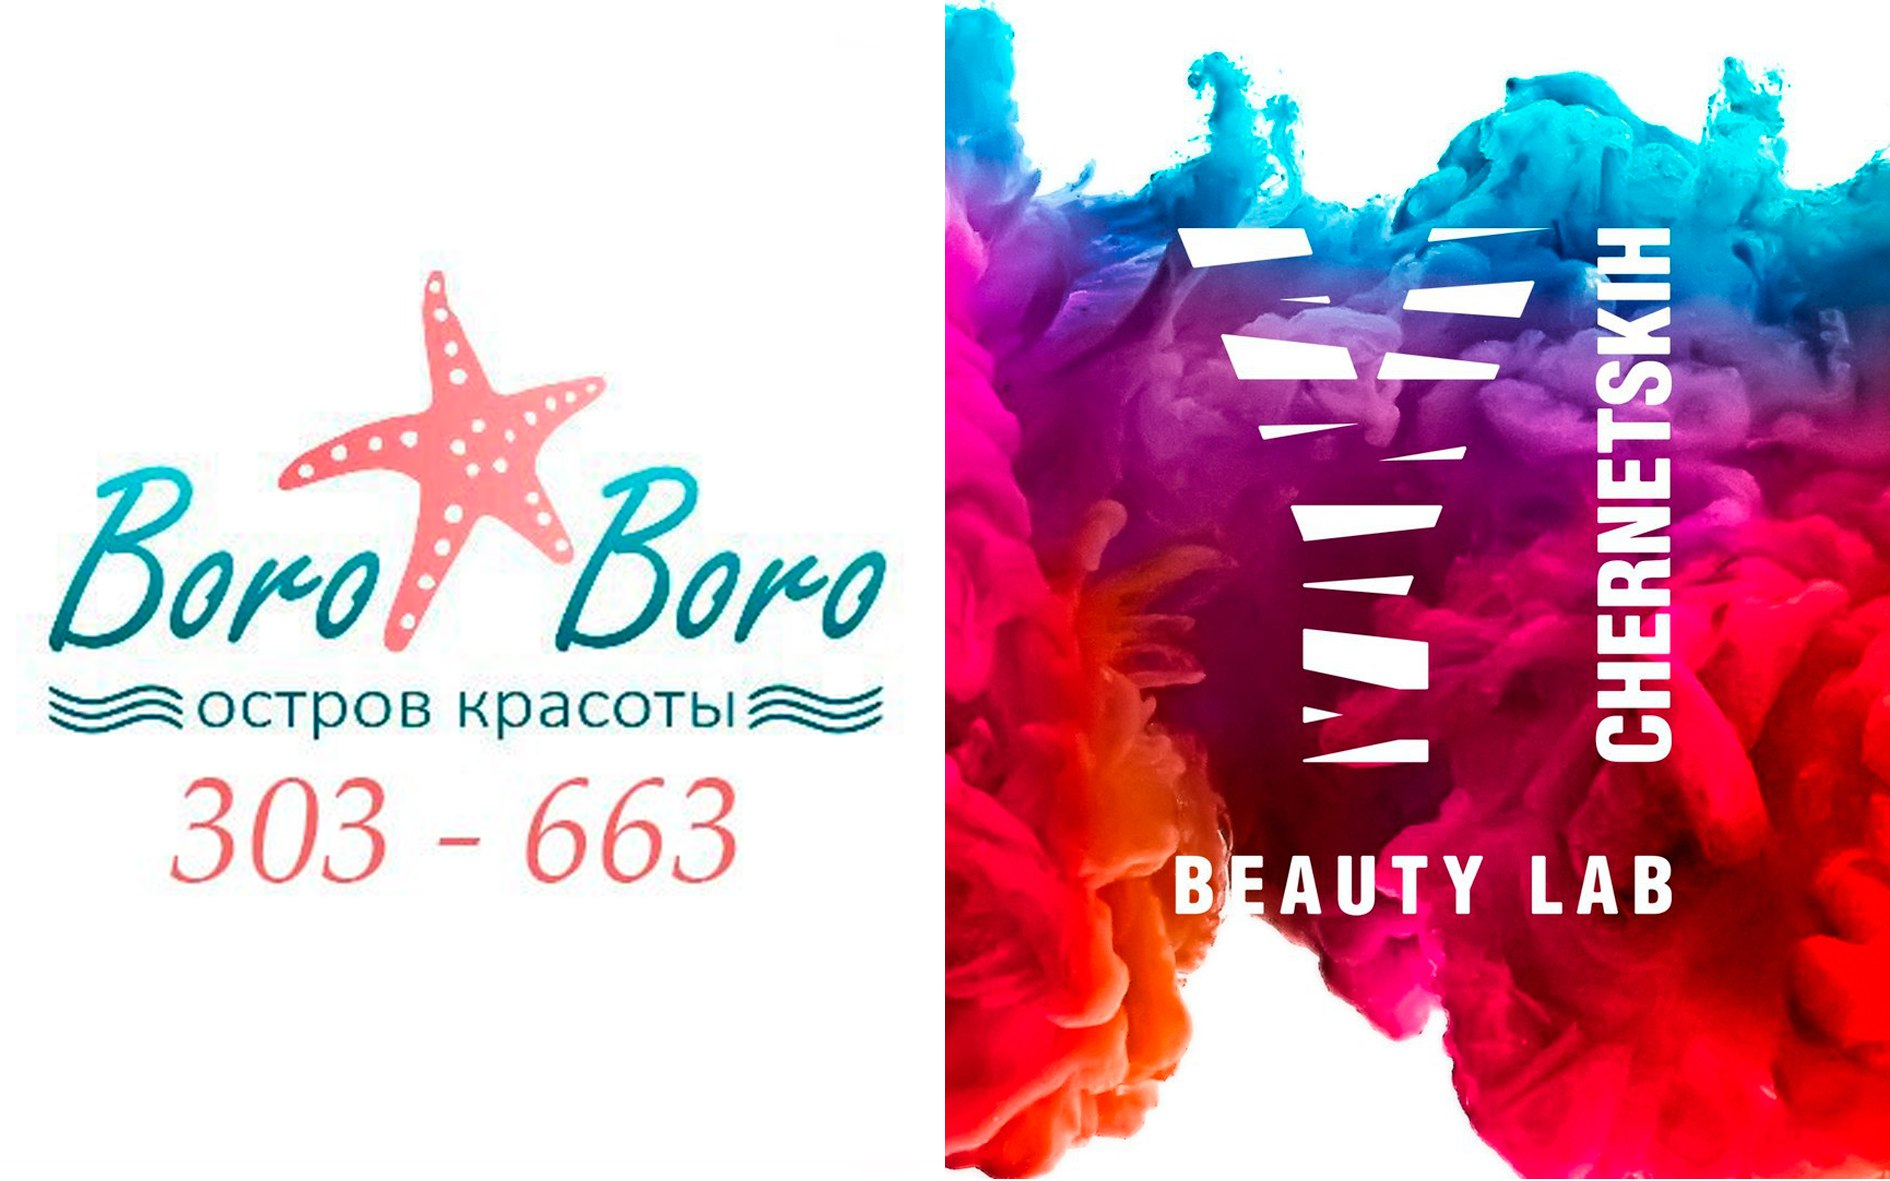 Beauty Lab Chernetskih и салон Boro Boro работают в тандеме